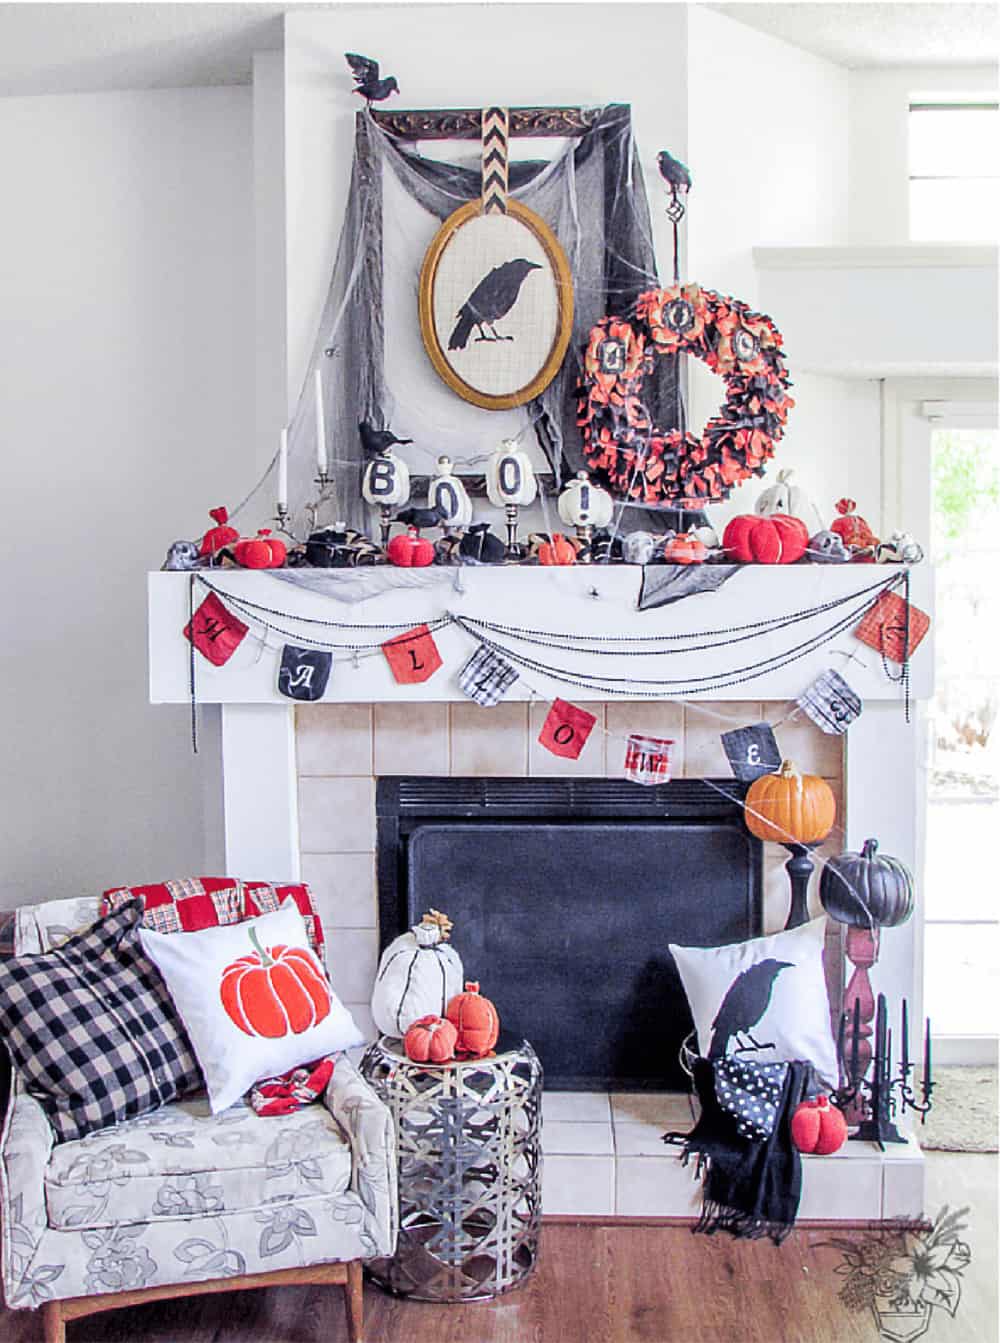 Farmhouse Halloween decor with DIY crafts like a rag wreath, portraits, and garland.